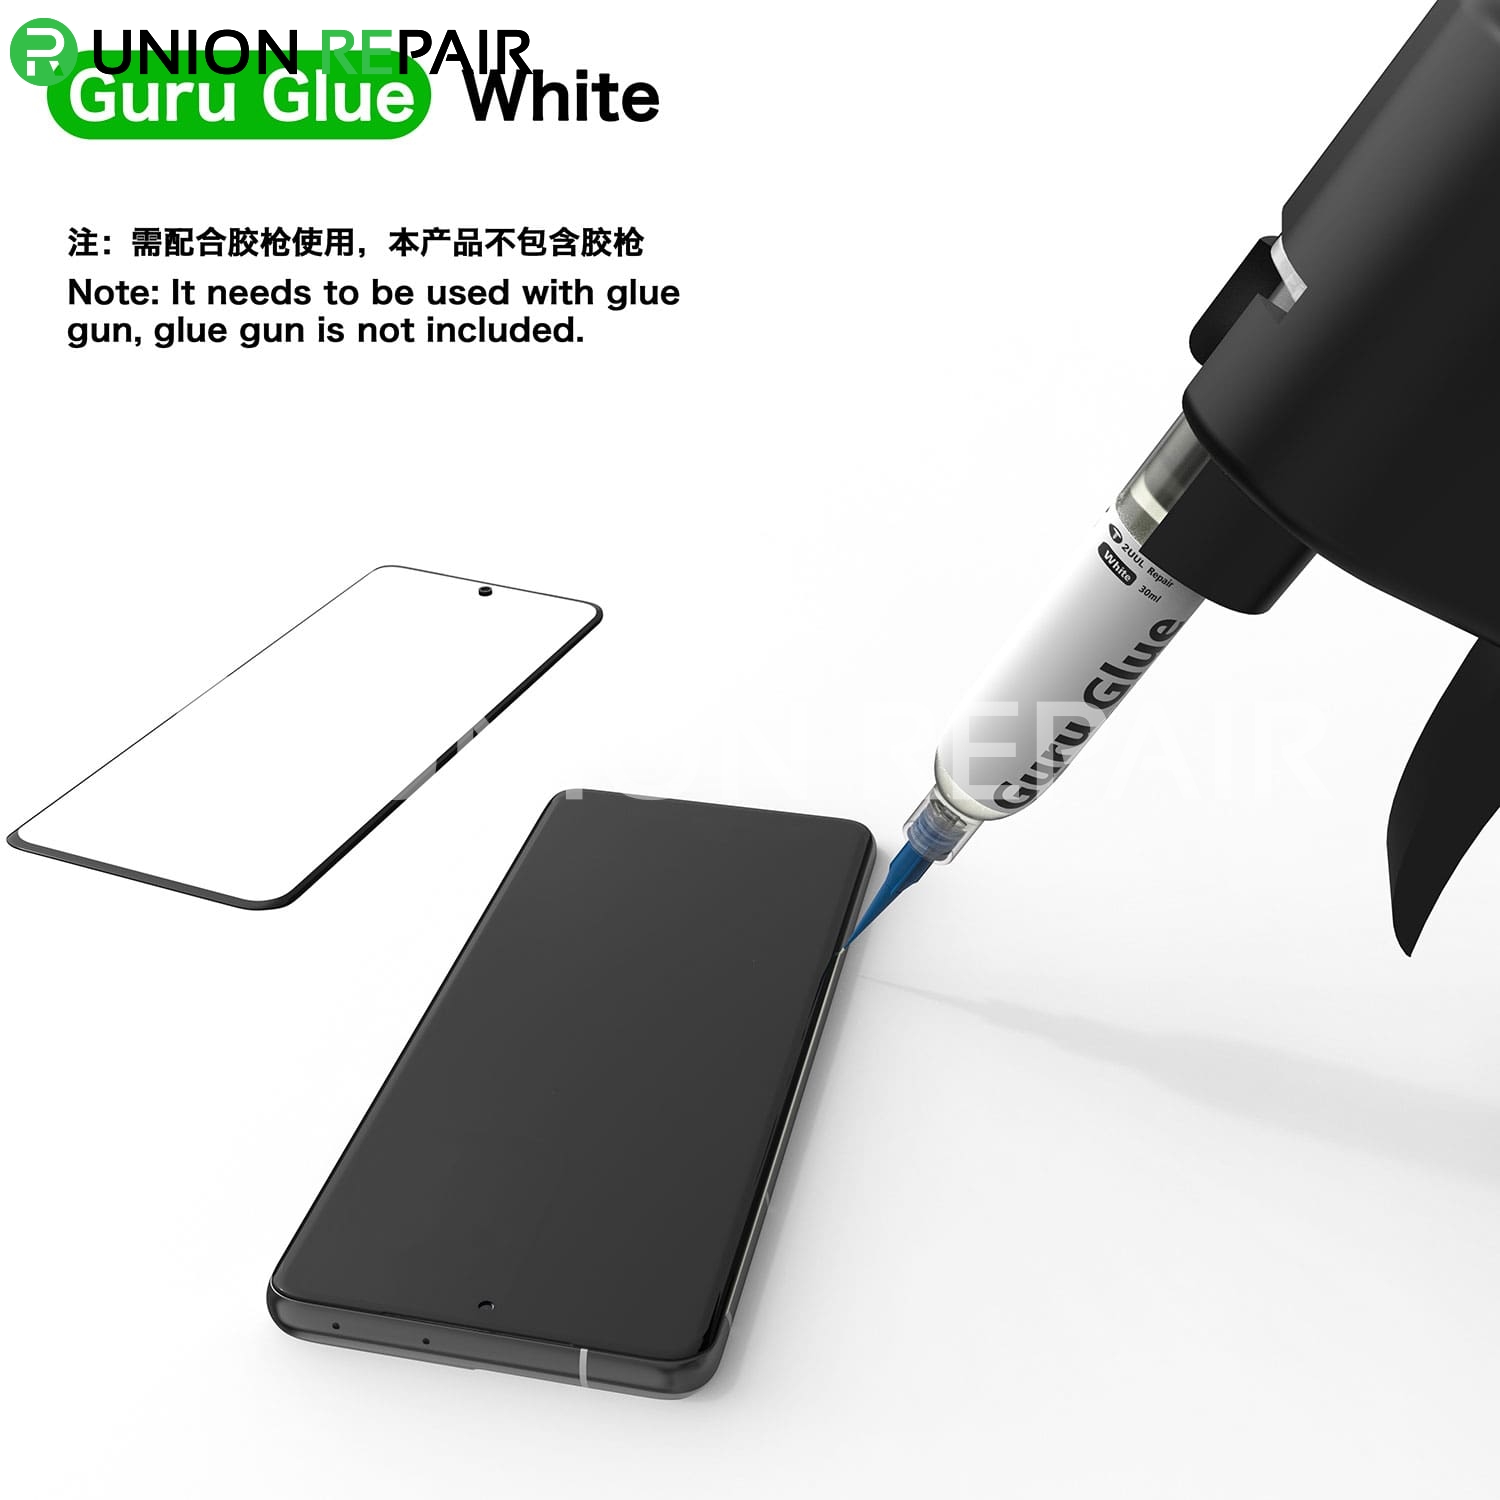 https://images.unionrepair.com/images/watermarked/1/detailed/52/U0366-2uul-guru-glue-soft-buffer-adhesive-for-phone-repair-30ml-black-white-4.jpg?t=1701254234